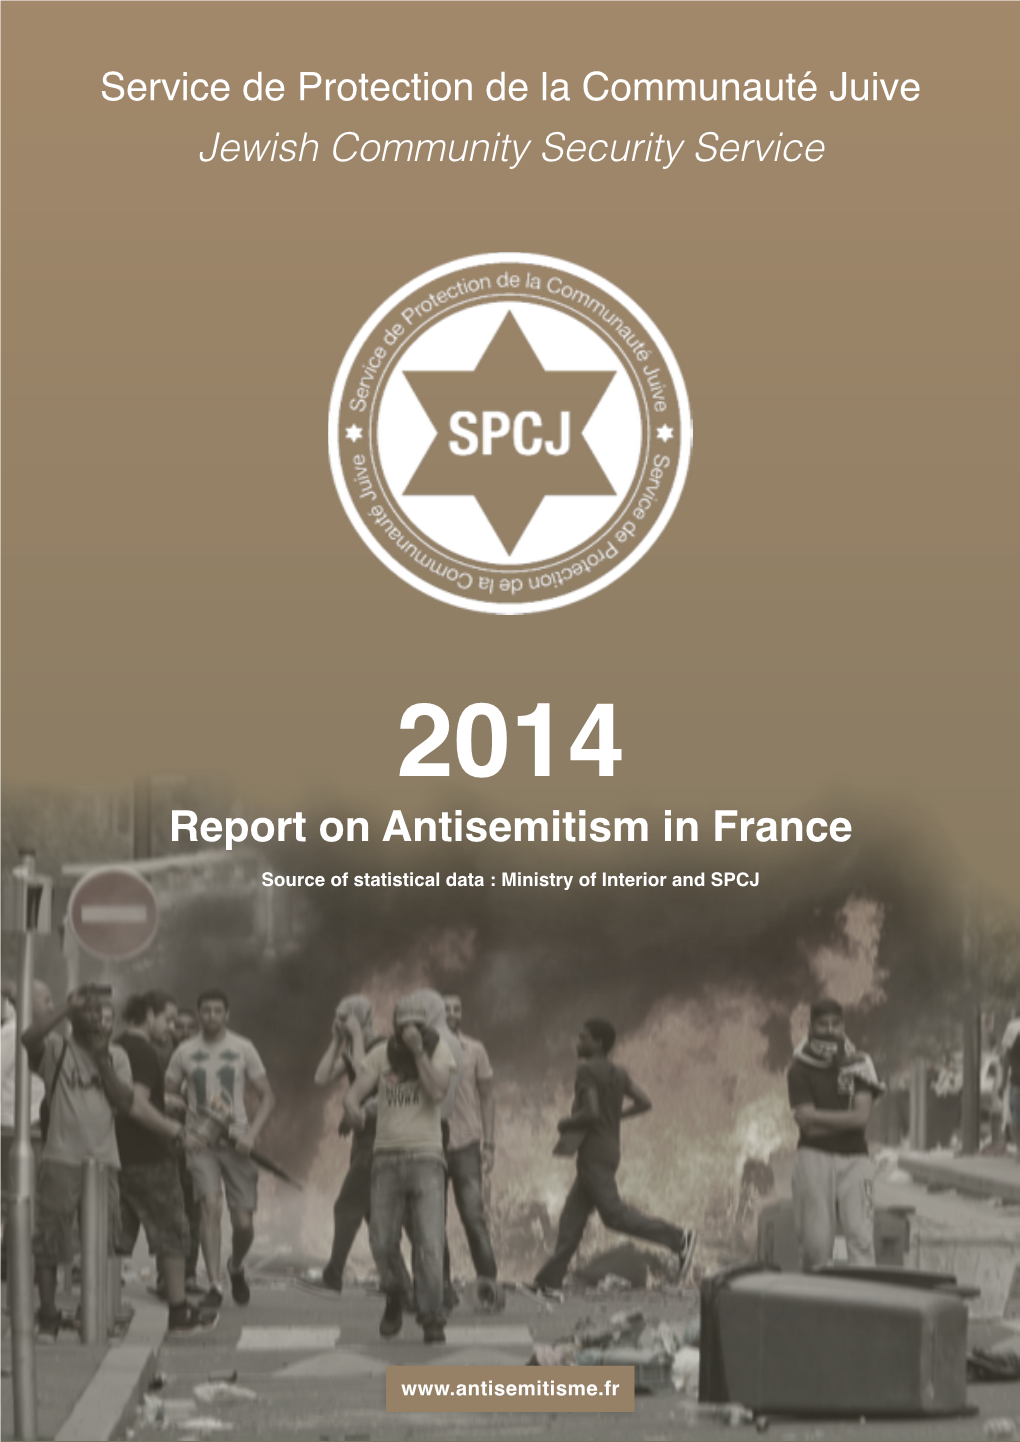 Antisemitism in France